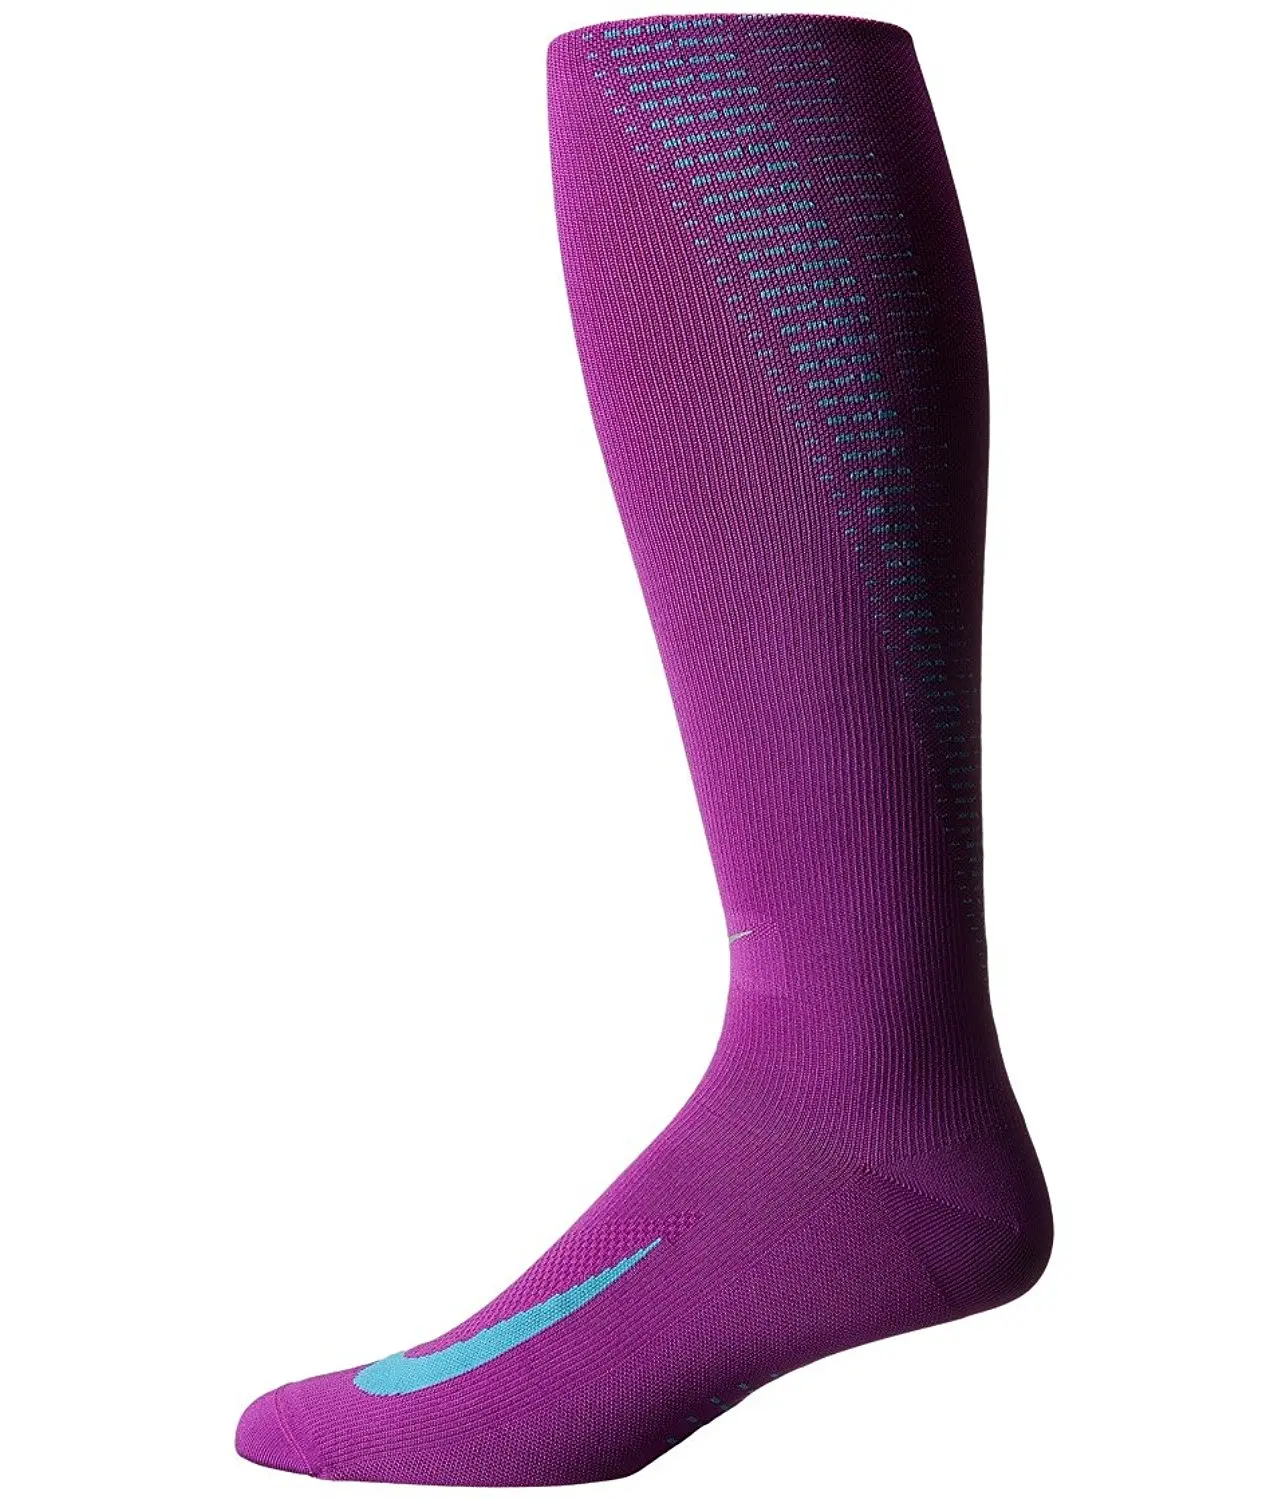 nike compression socks mens